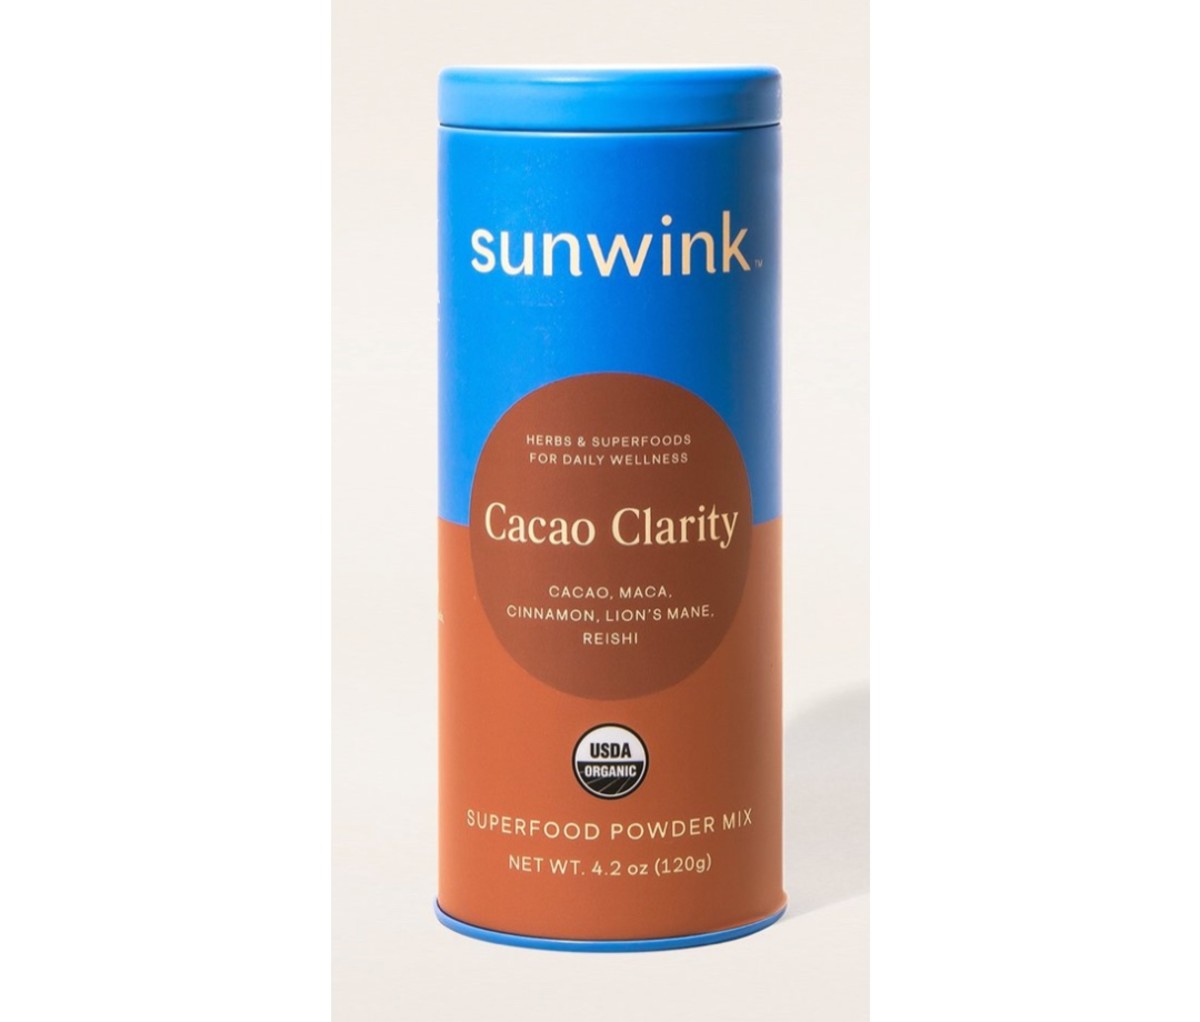 Sunwink Cacao Clarity